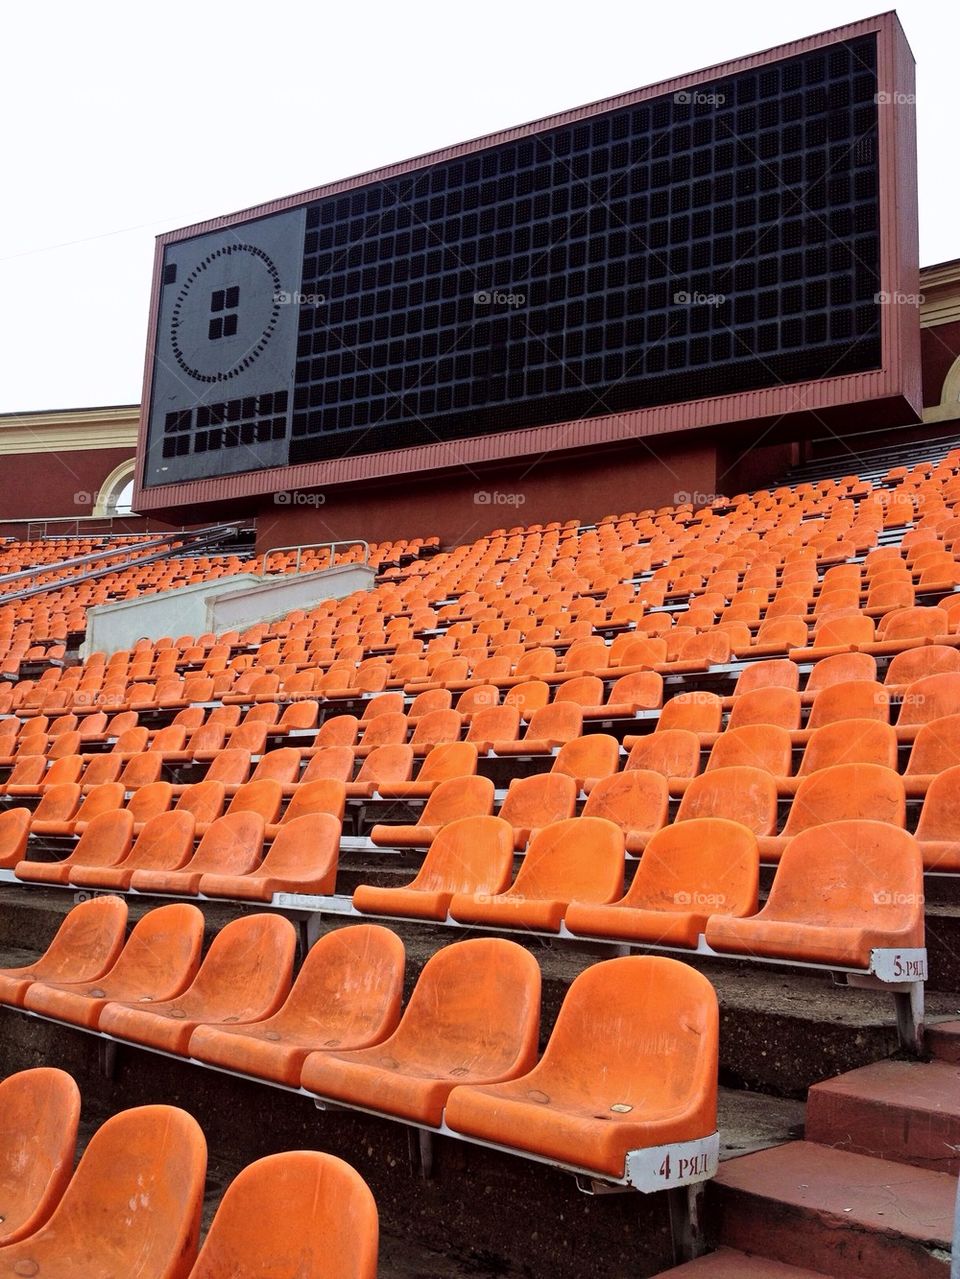 Orange stadium sears with score board